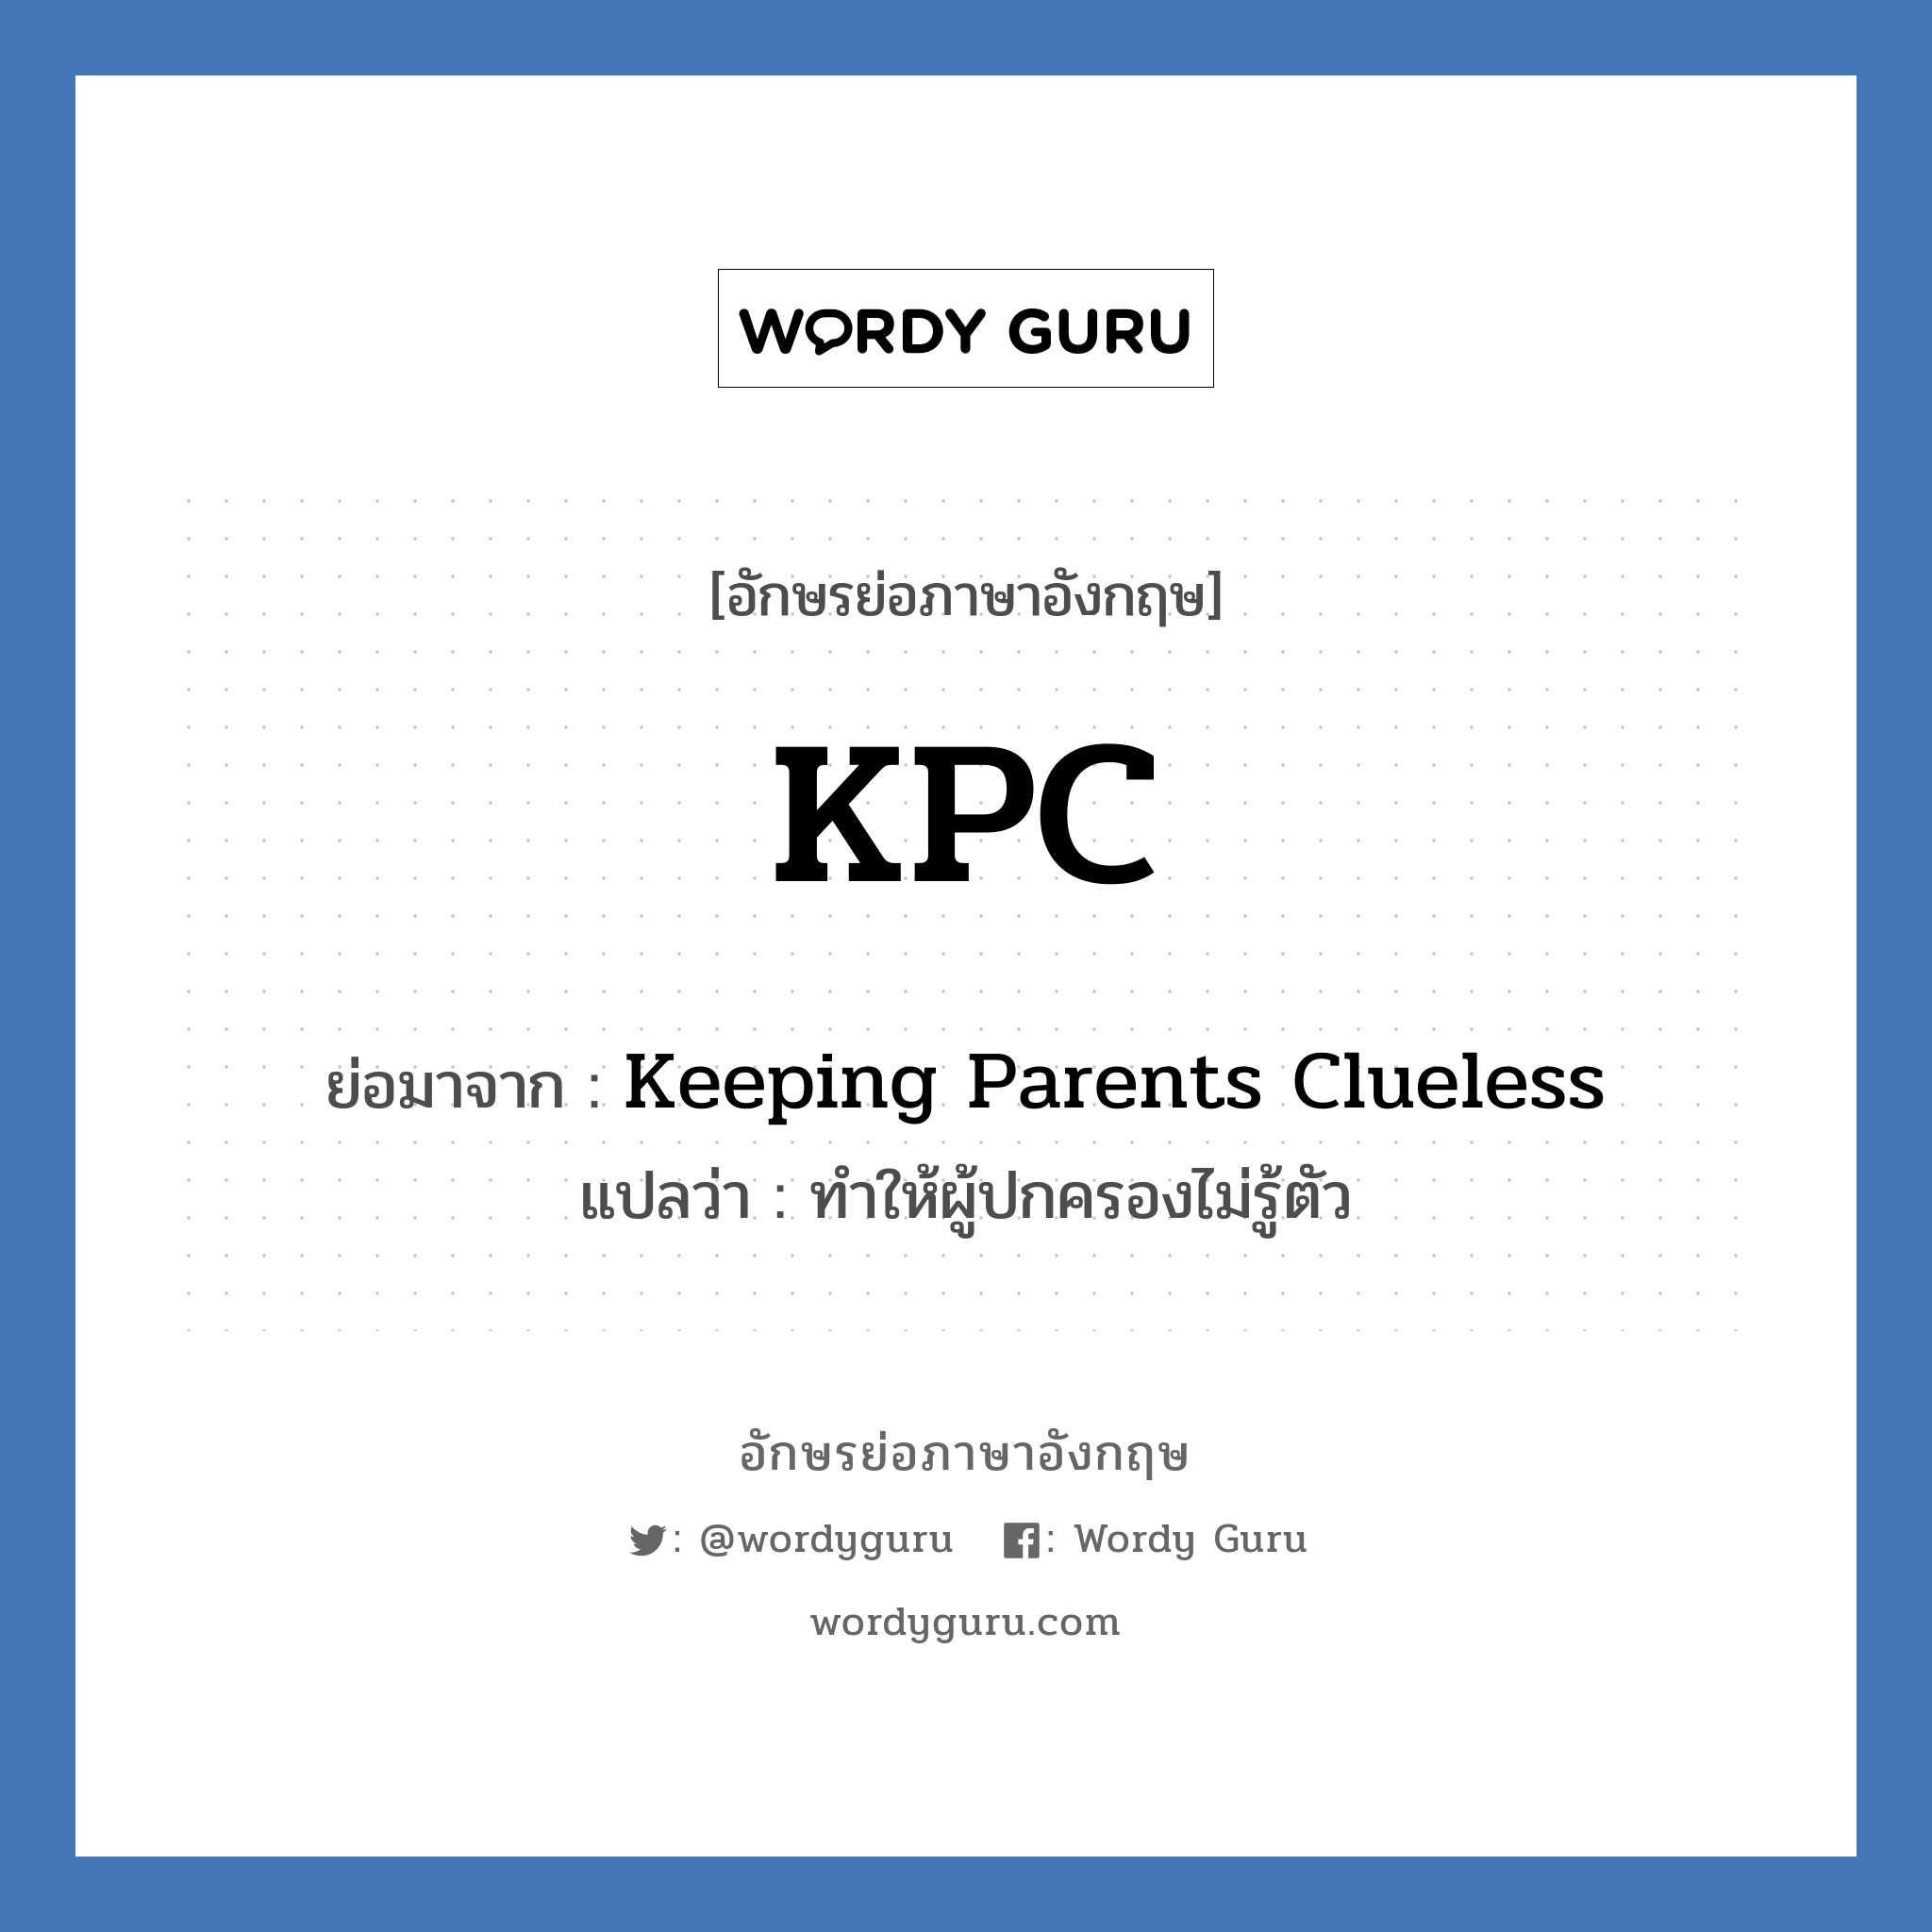 KPC ย่อมาจาก? แปลว่า?, อักษรย่อภาษาอังกฤษ KPC ย่อมาจาก Keeping Parents Clueless แปลว่า ทำให้ผู้ปกครองไม่รู้ตัว